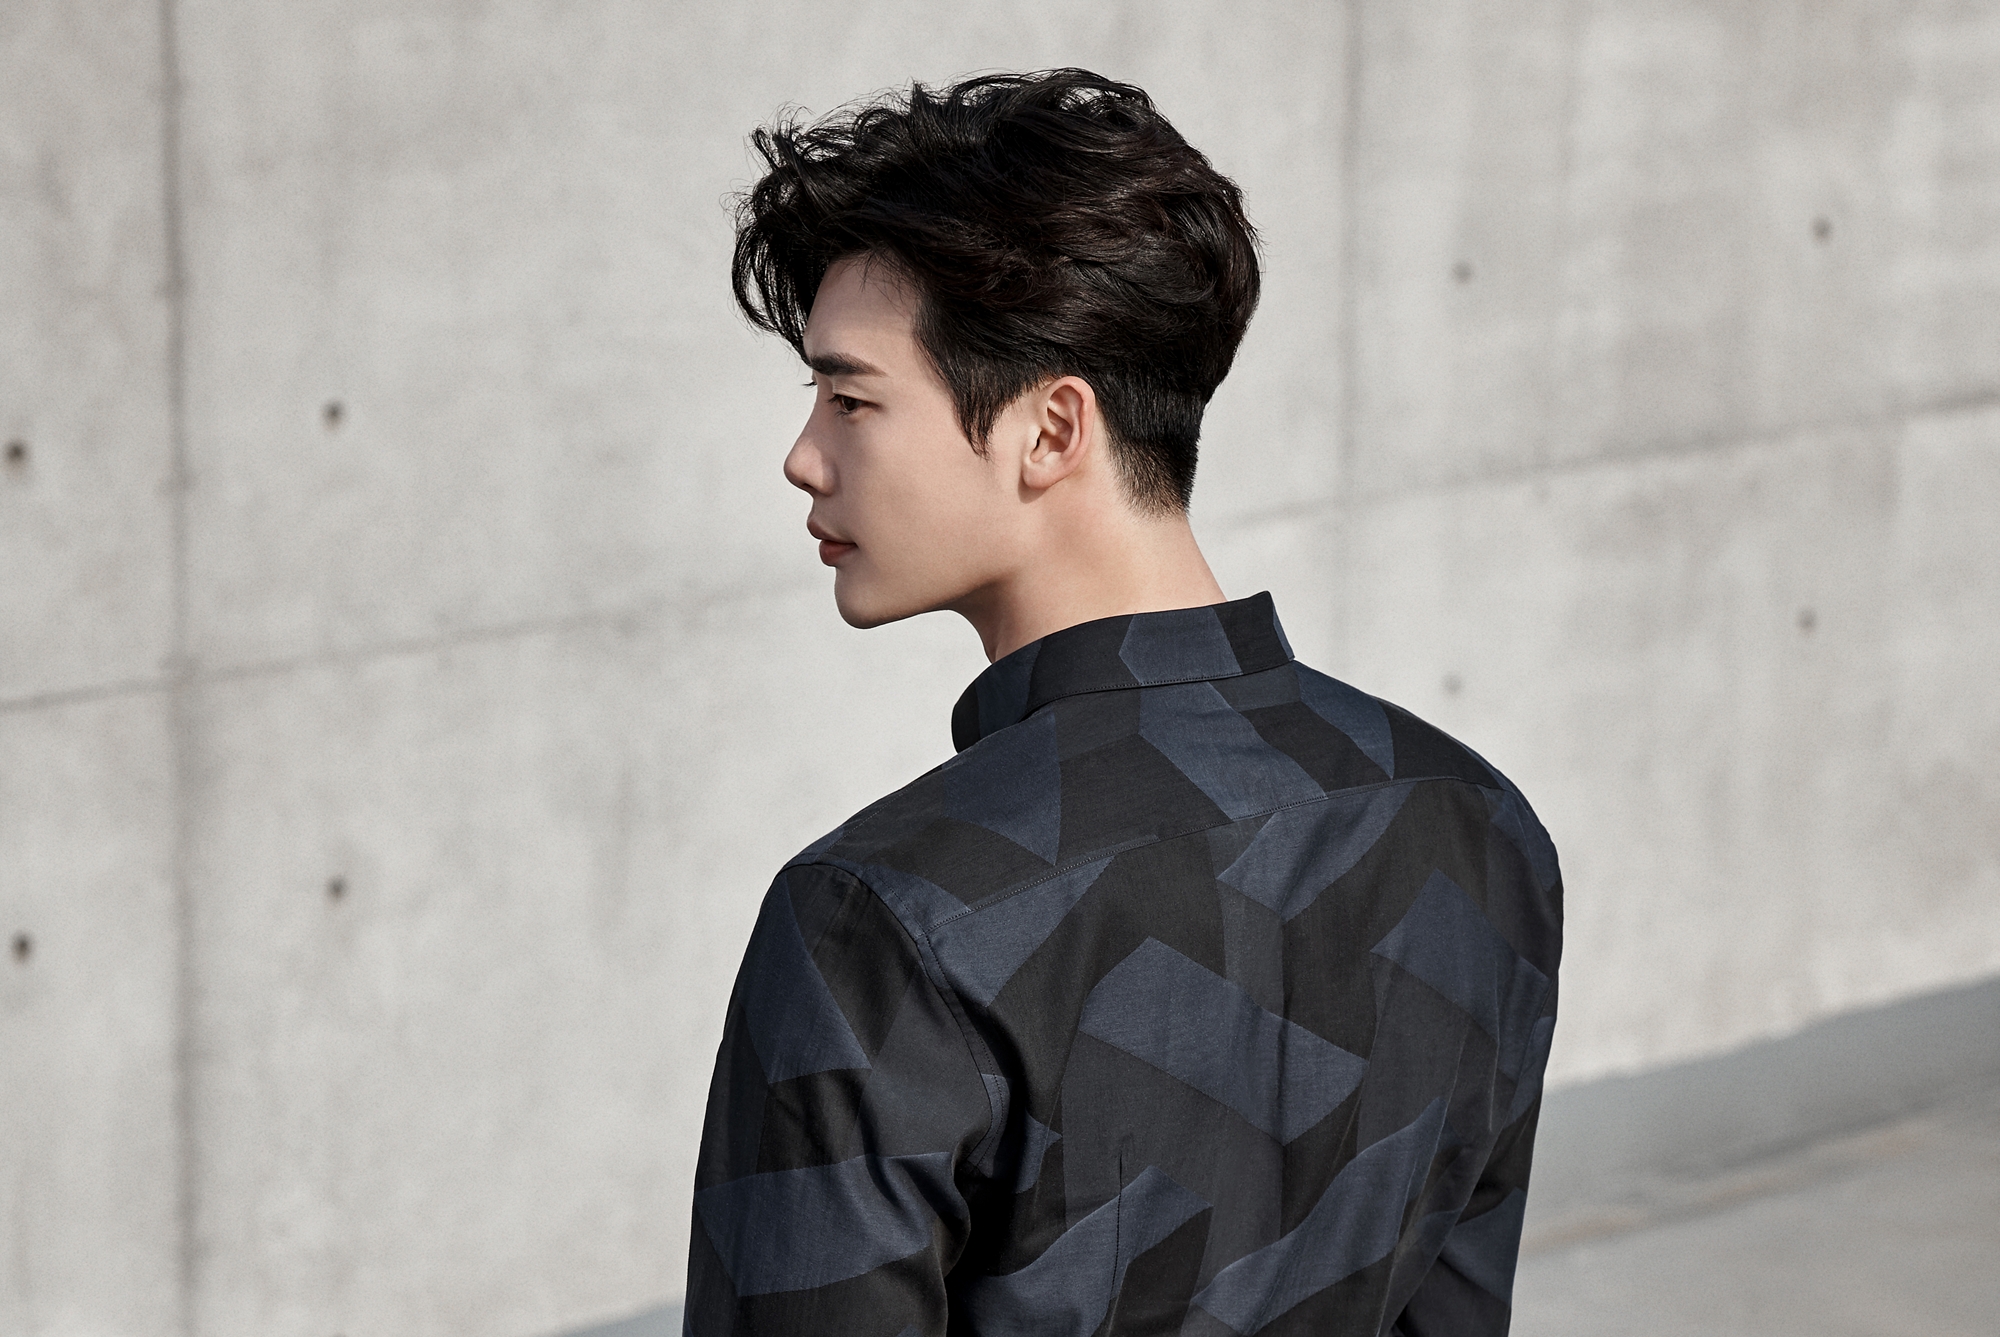 lee jong suk wallpaper,hair,hairstyle,neck,shoulder,fashion